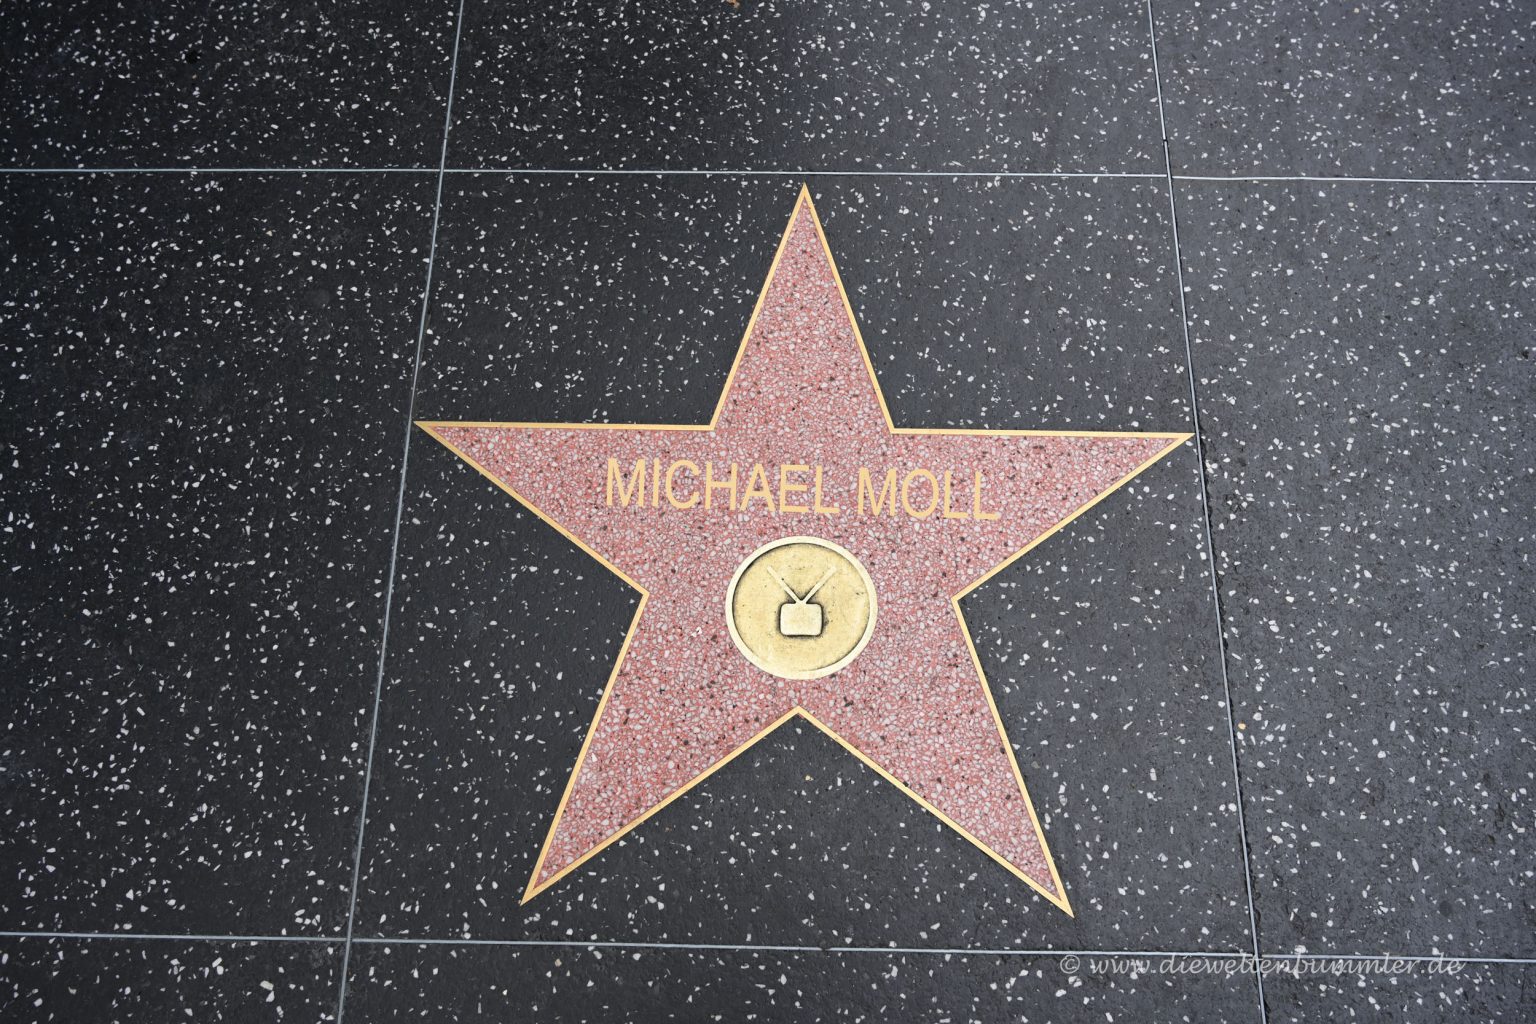 Michael Moll auf dem Walk of Fame